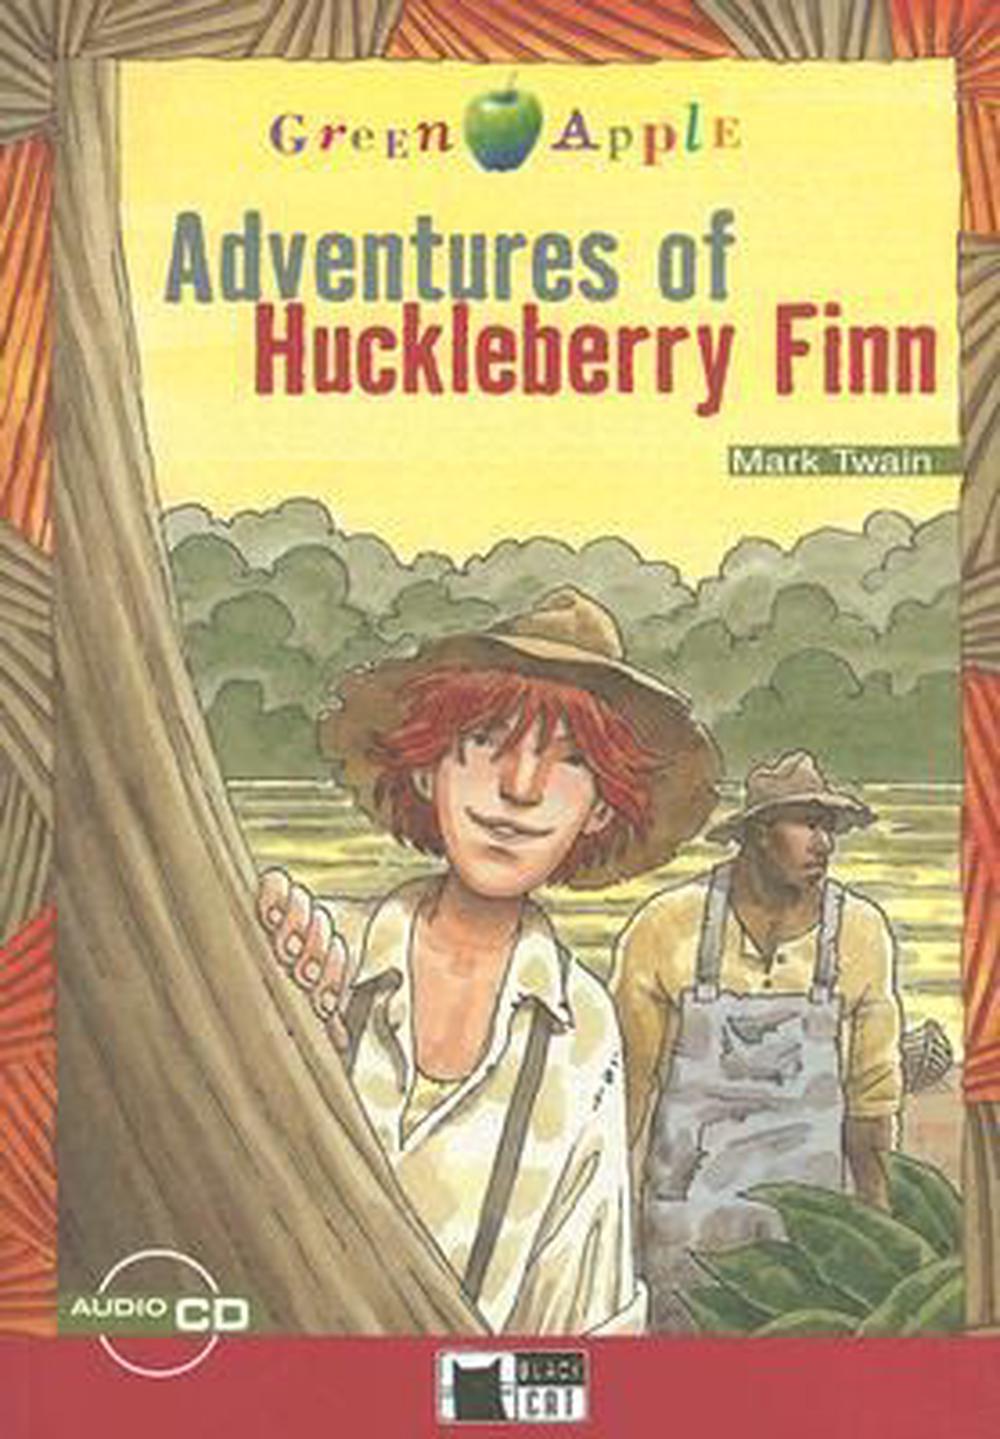 Adventures of Huckleberry Finn [With CD] by Mark Twain (English ...